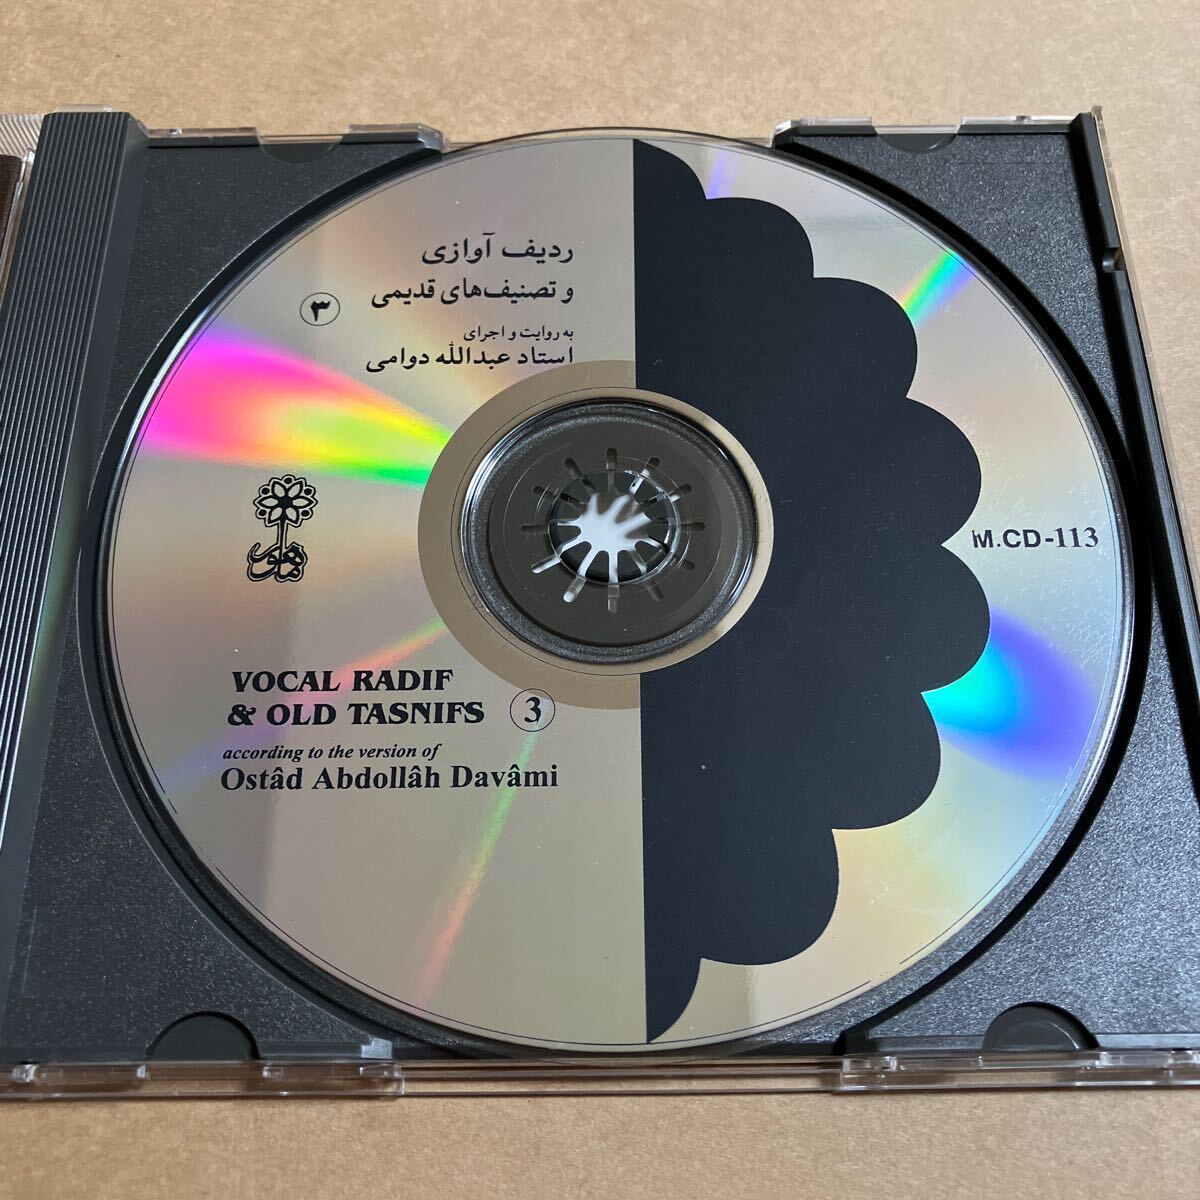 CD 3 OSTAD ABDOLLAH DAVAMI / VOCAL RADIF & OLD TASNIFS 3 MCD113 IRANi Ran PERSIANperusiaperu автомобиль Mahoor Institute